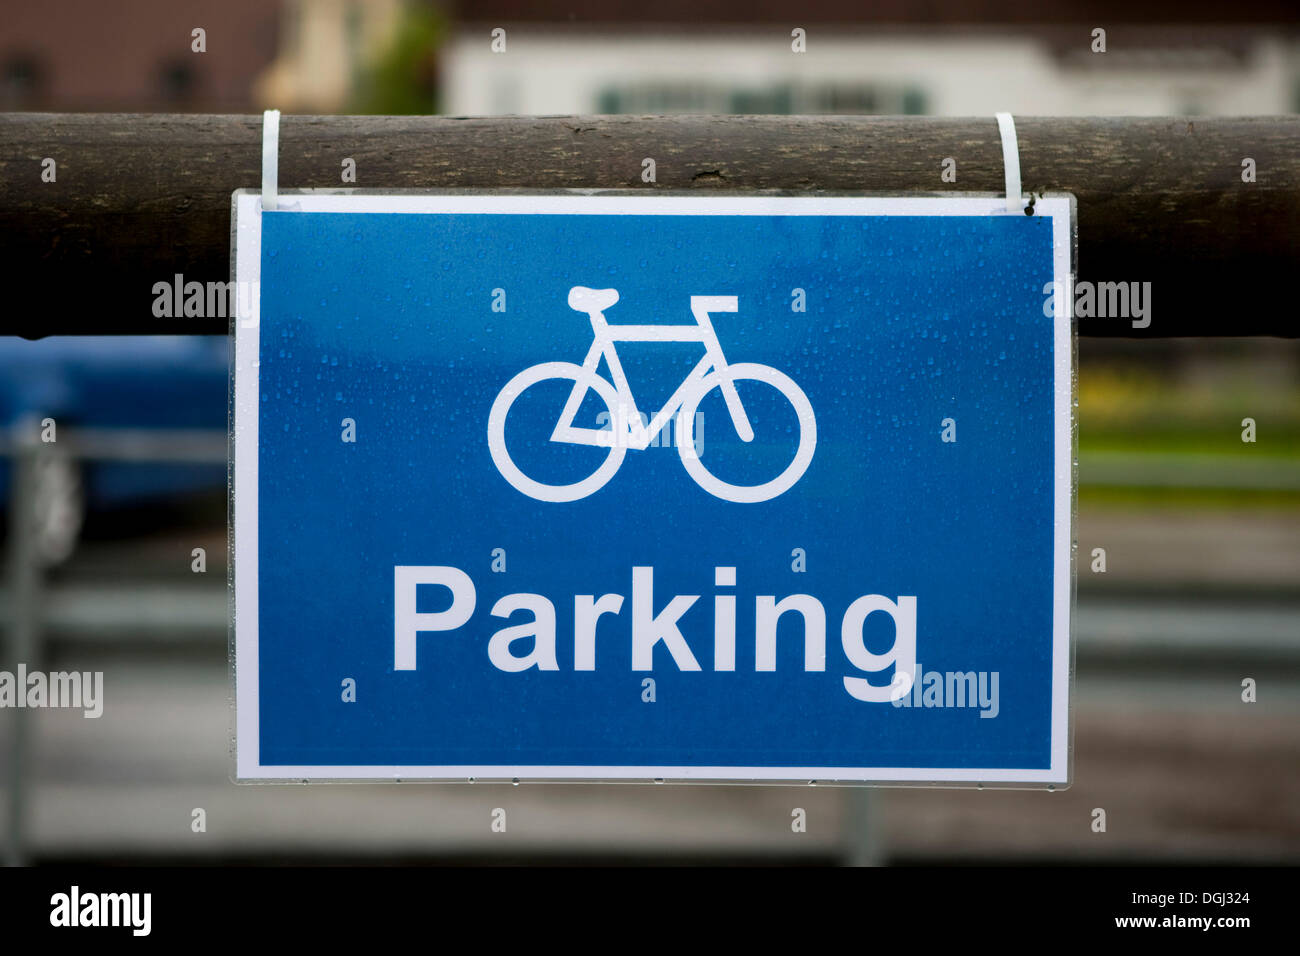 Fahrrad-Parkplatz-Schild Stockfotografie - Alamy